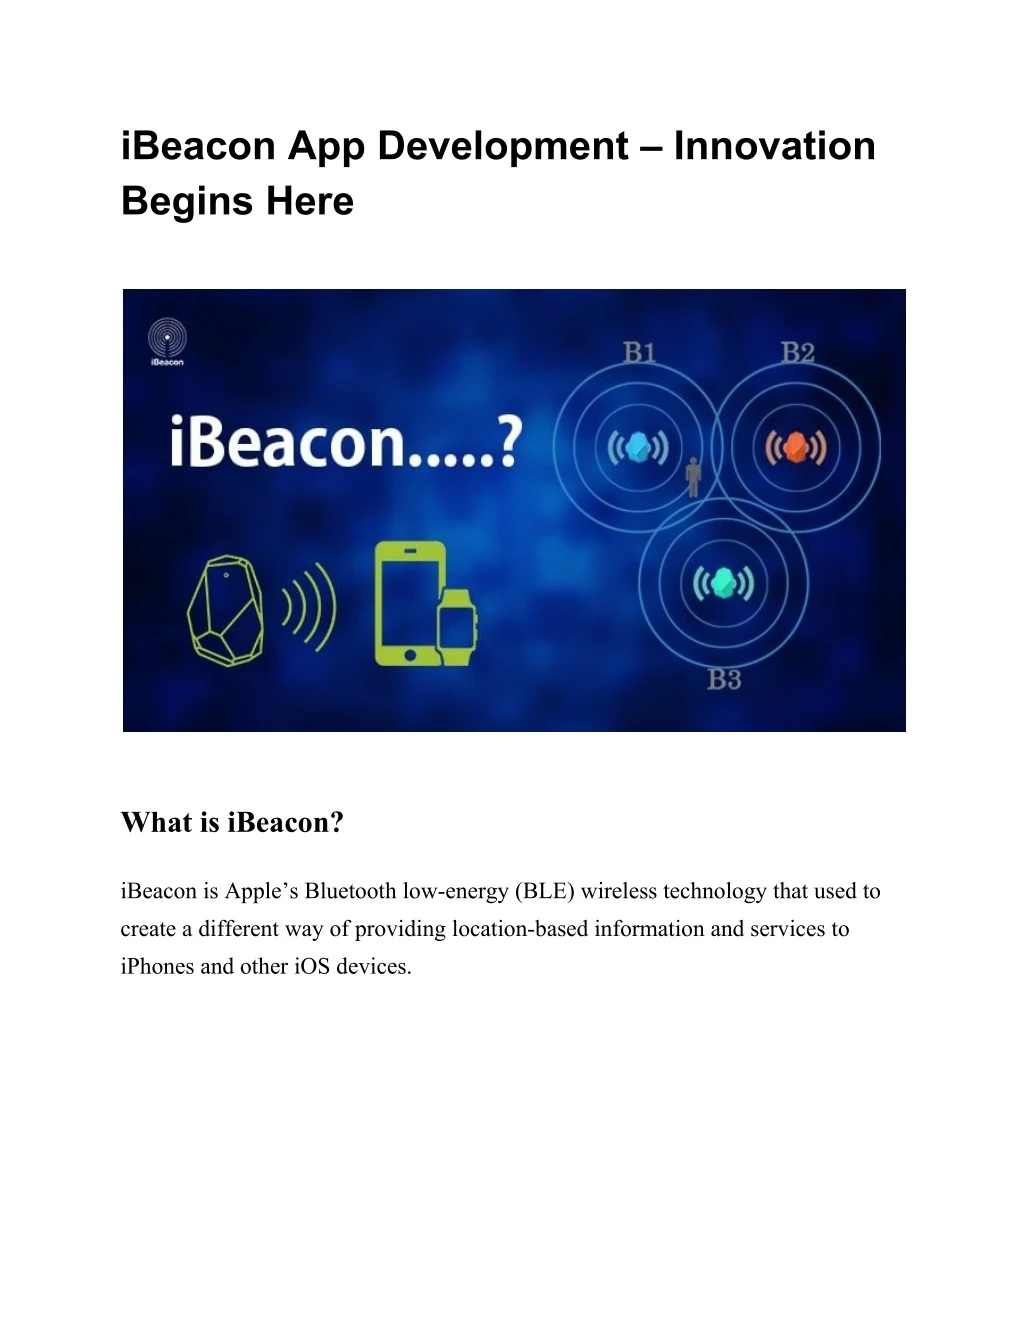 ibeacon app development innovation begins here